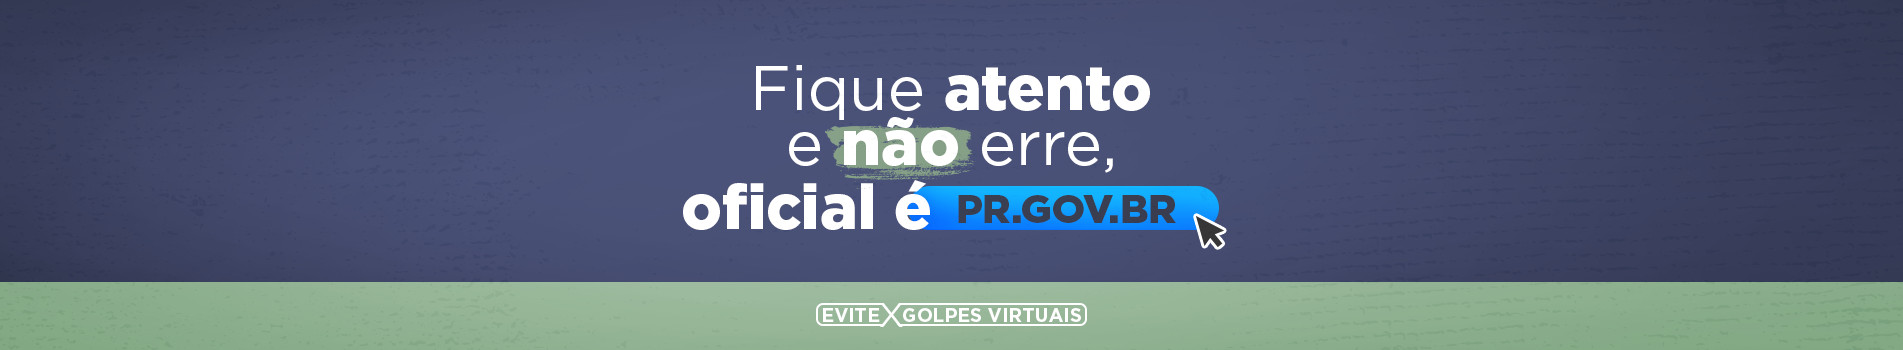 Banner fique atento, oficial pr.gov.br